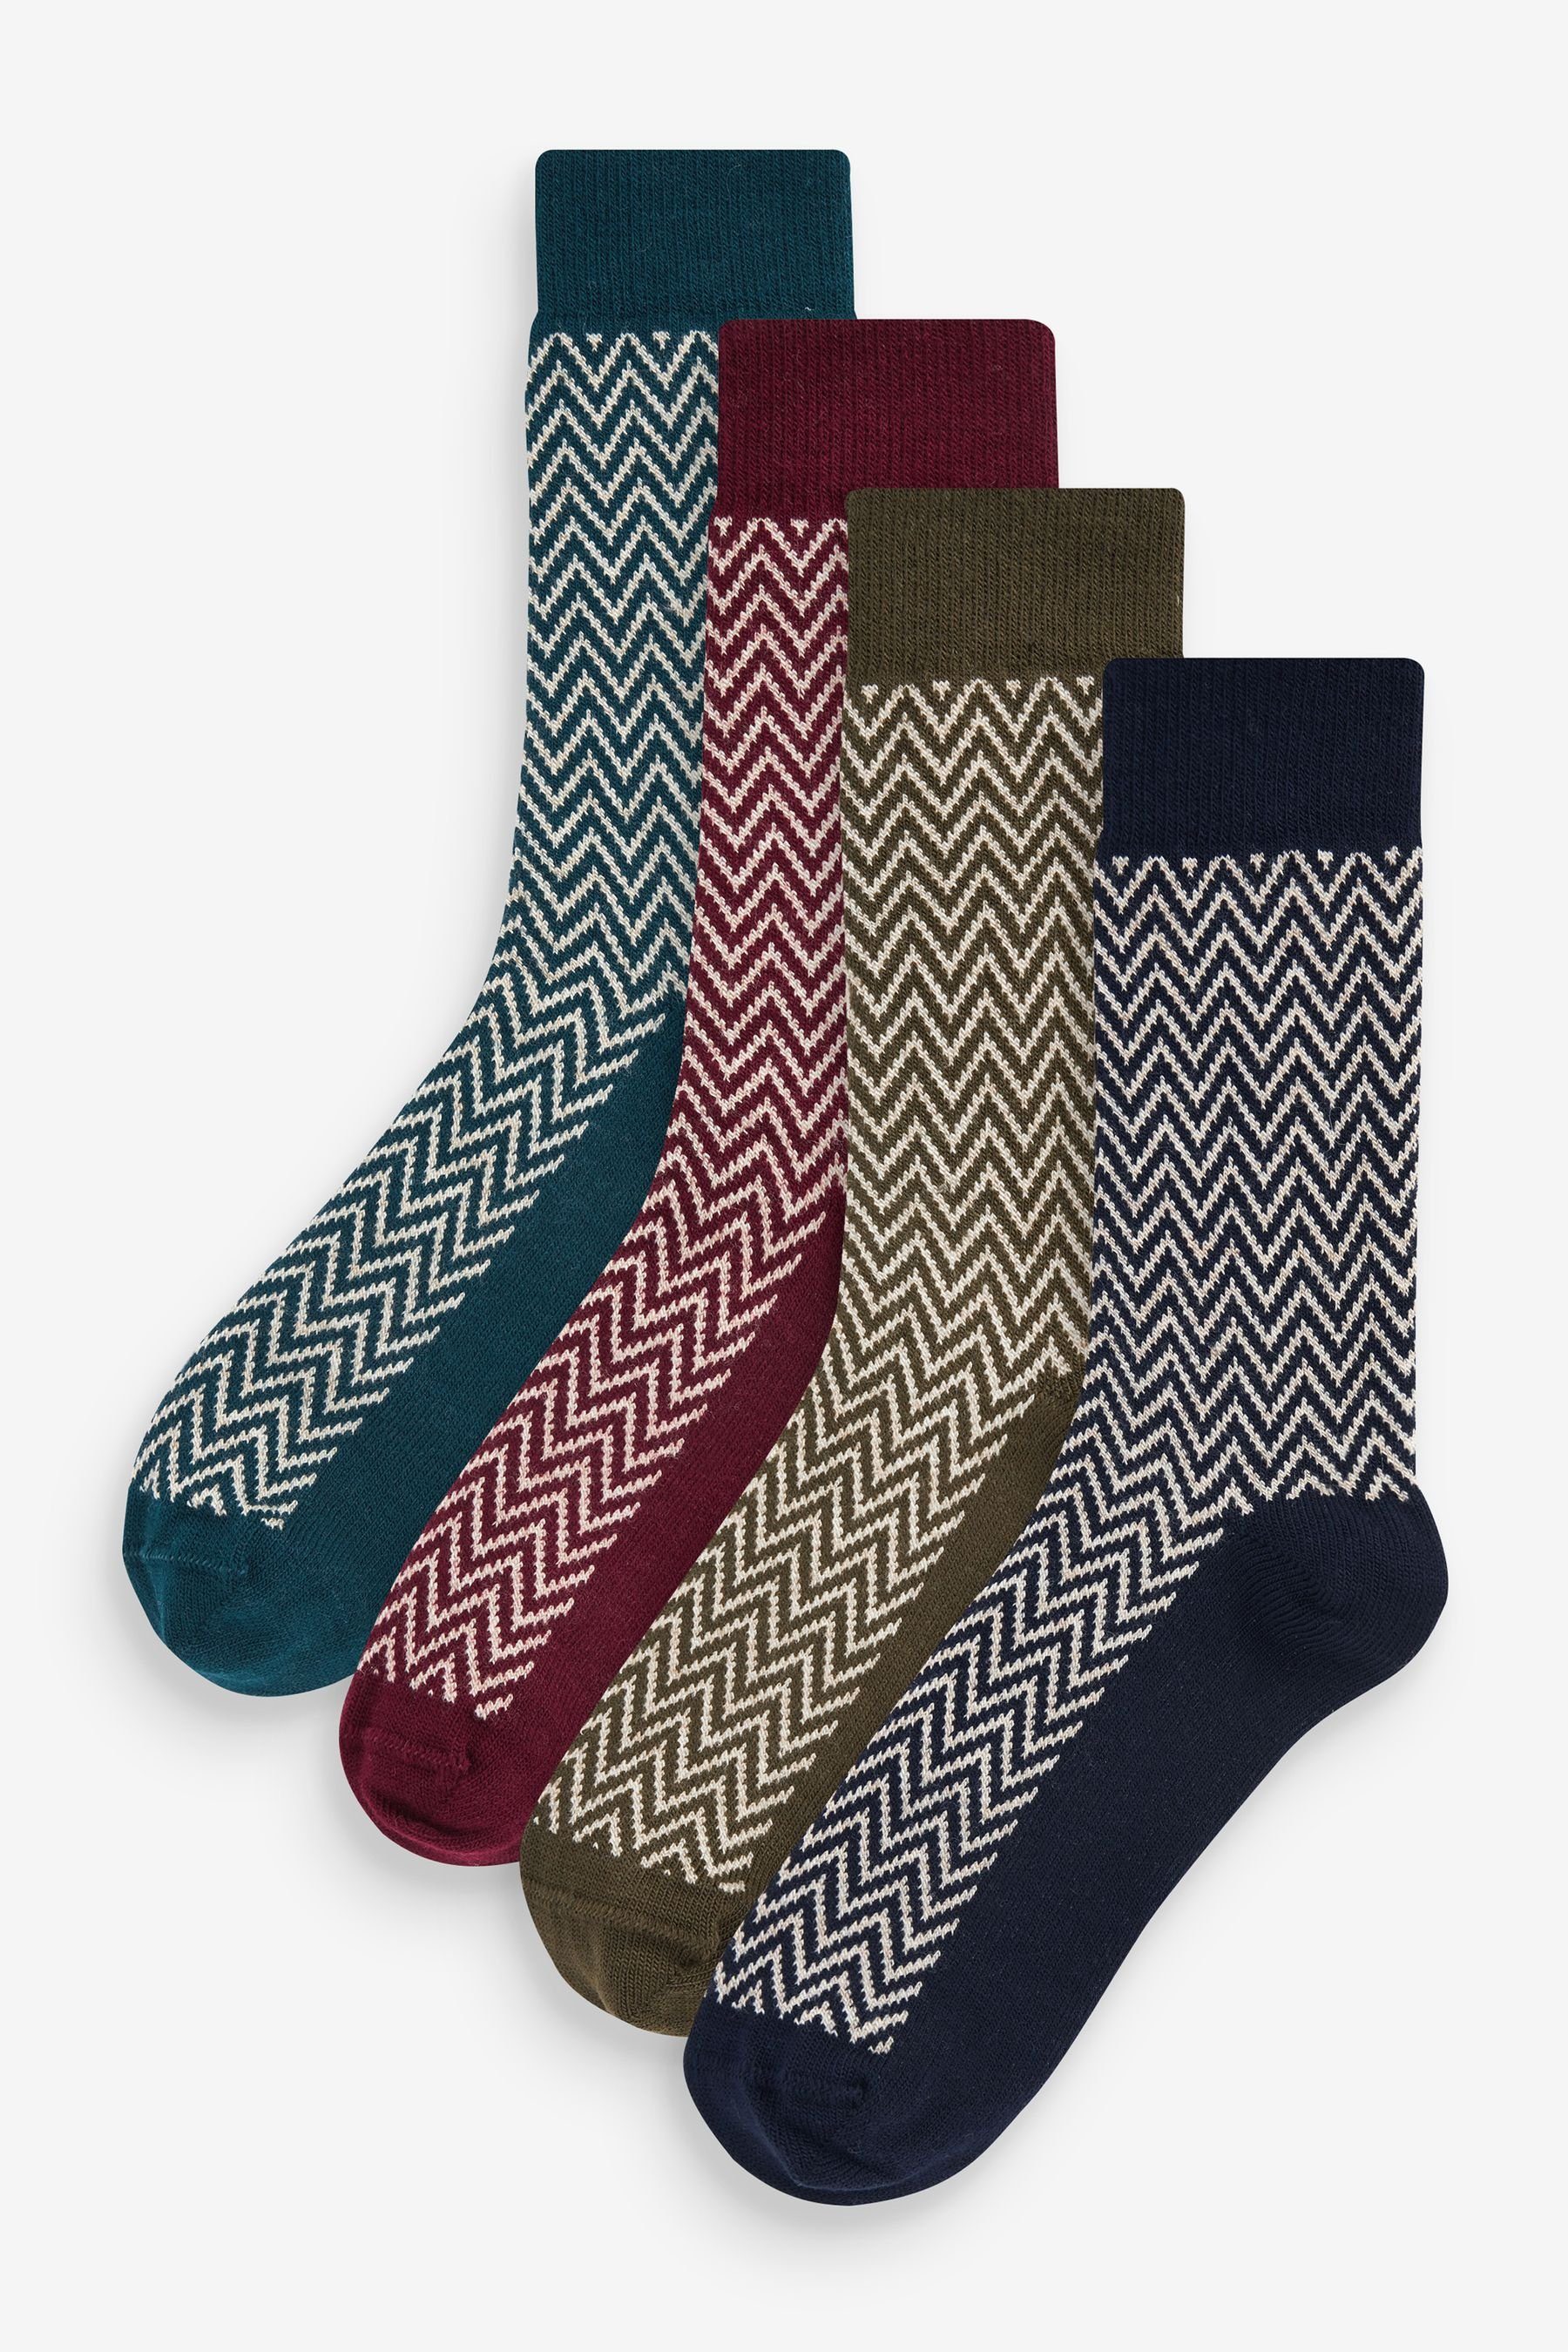 Next Kurzsocken Schwere Socken mit Muster, 4er-Pack (4-Paar) Zig Zag